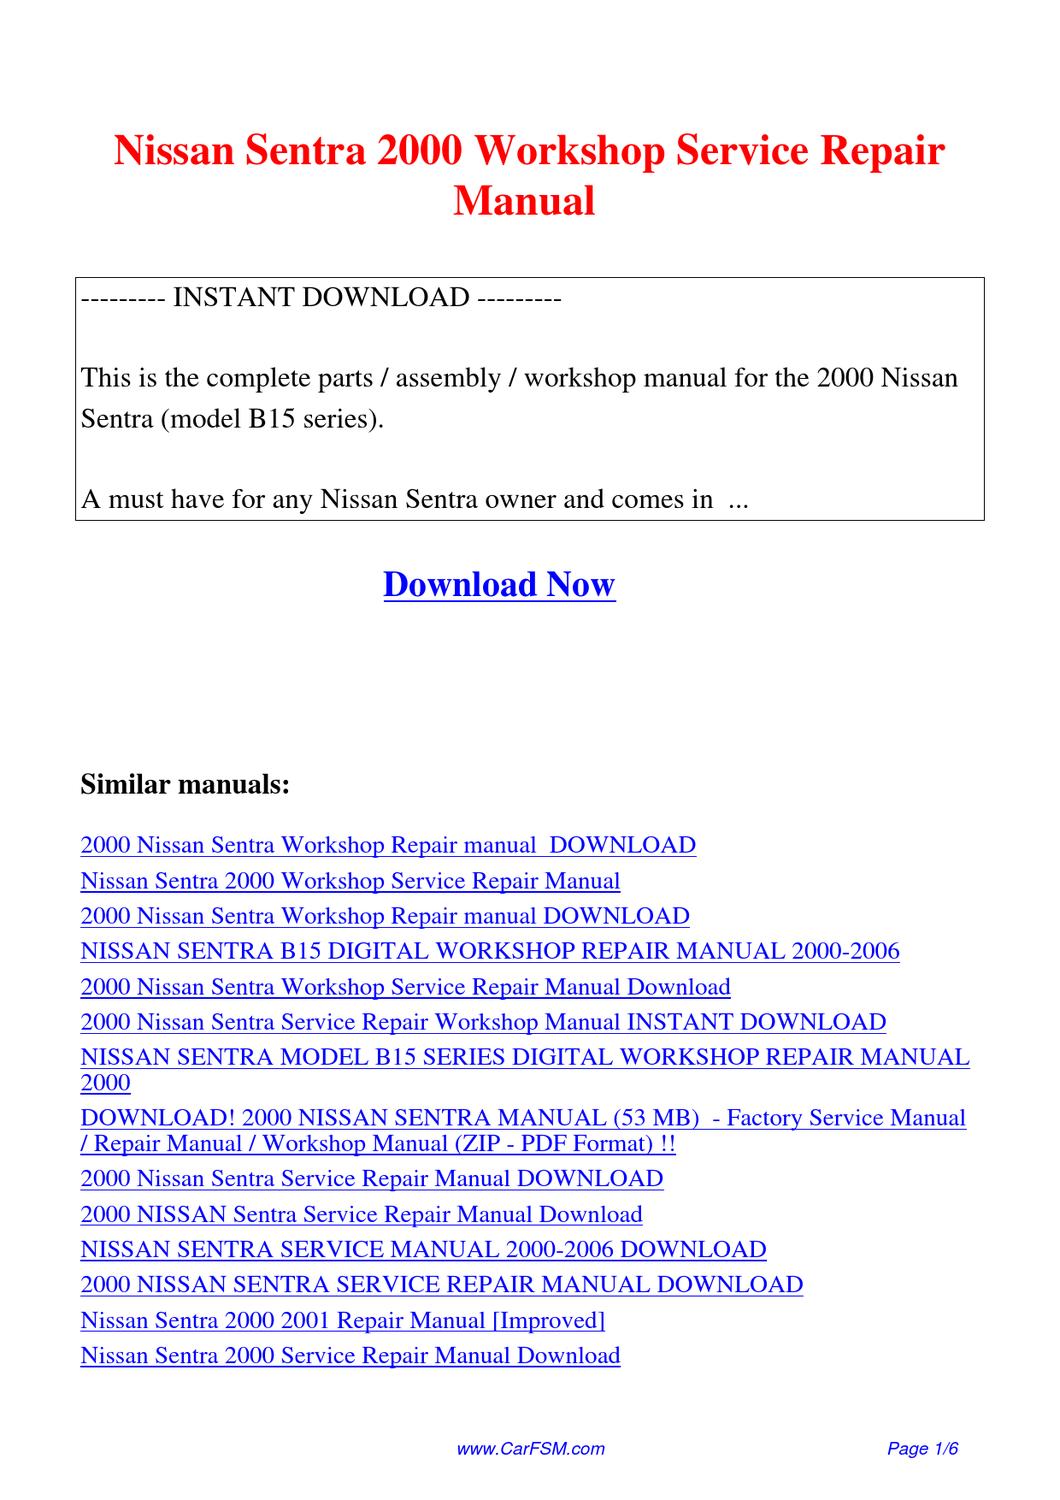 2001 nissan sentra factory service manual download online